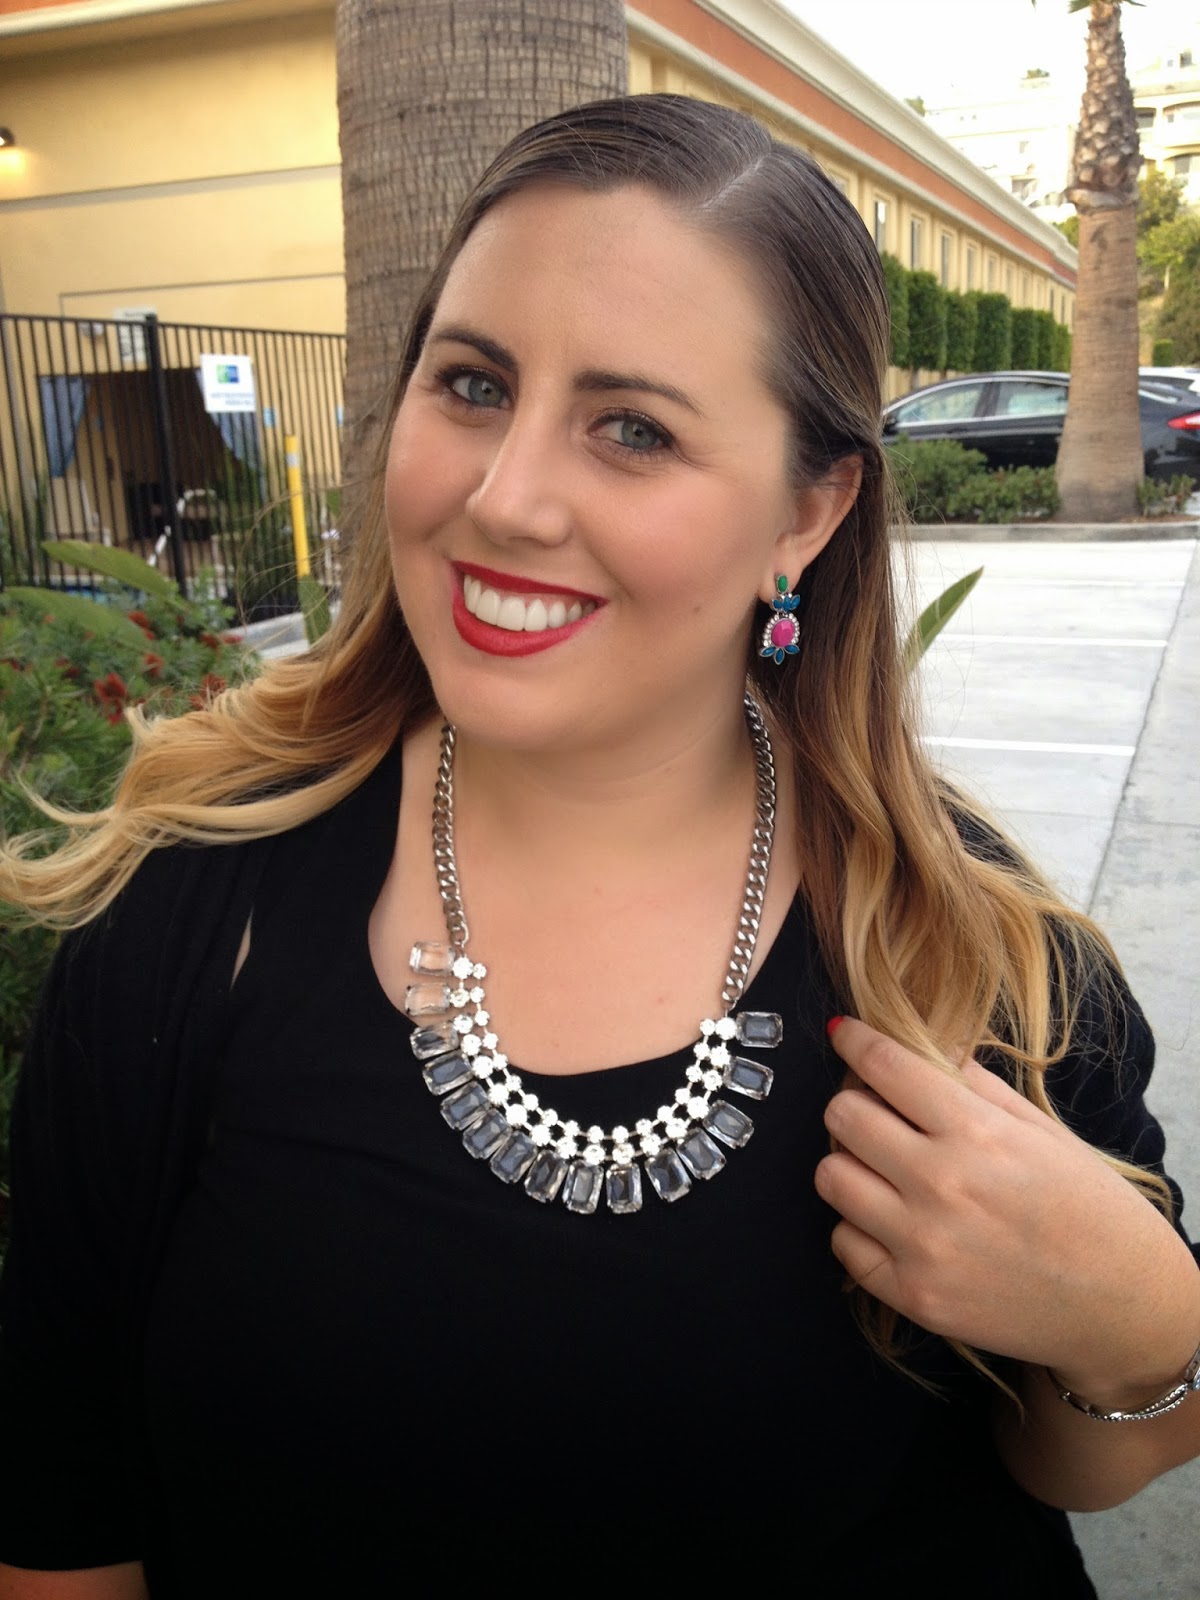 Join The Gossip: Lia Sophia Jewelry Giveaway!